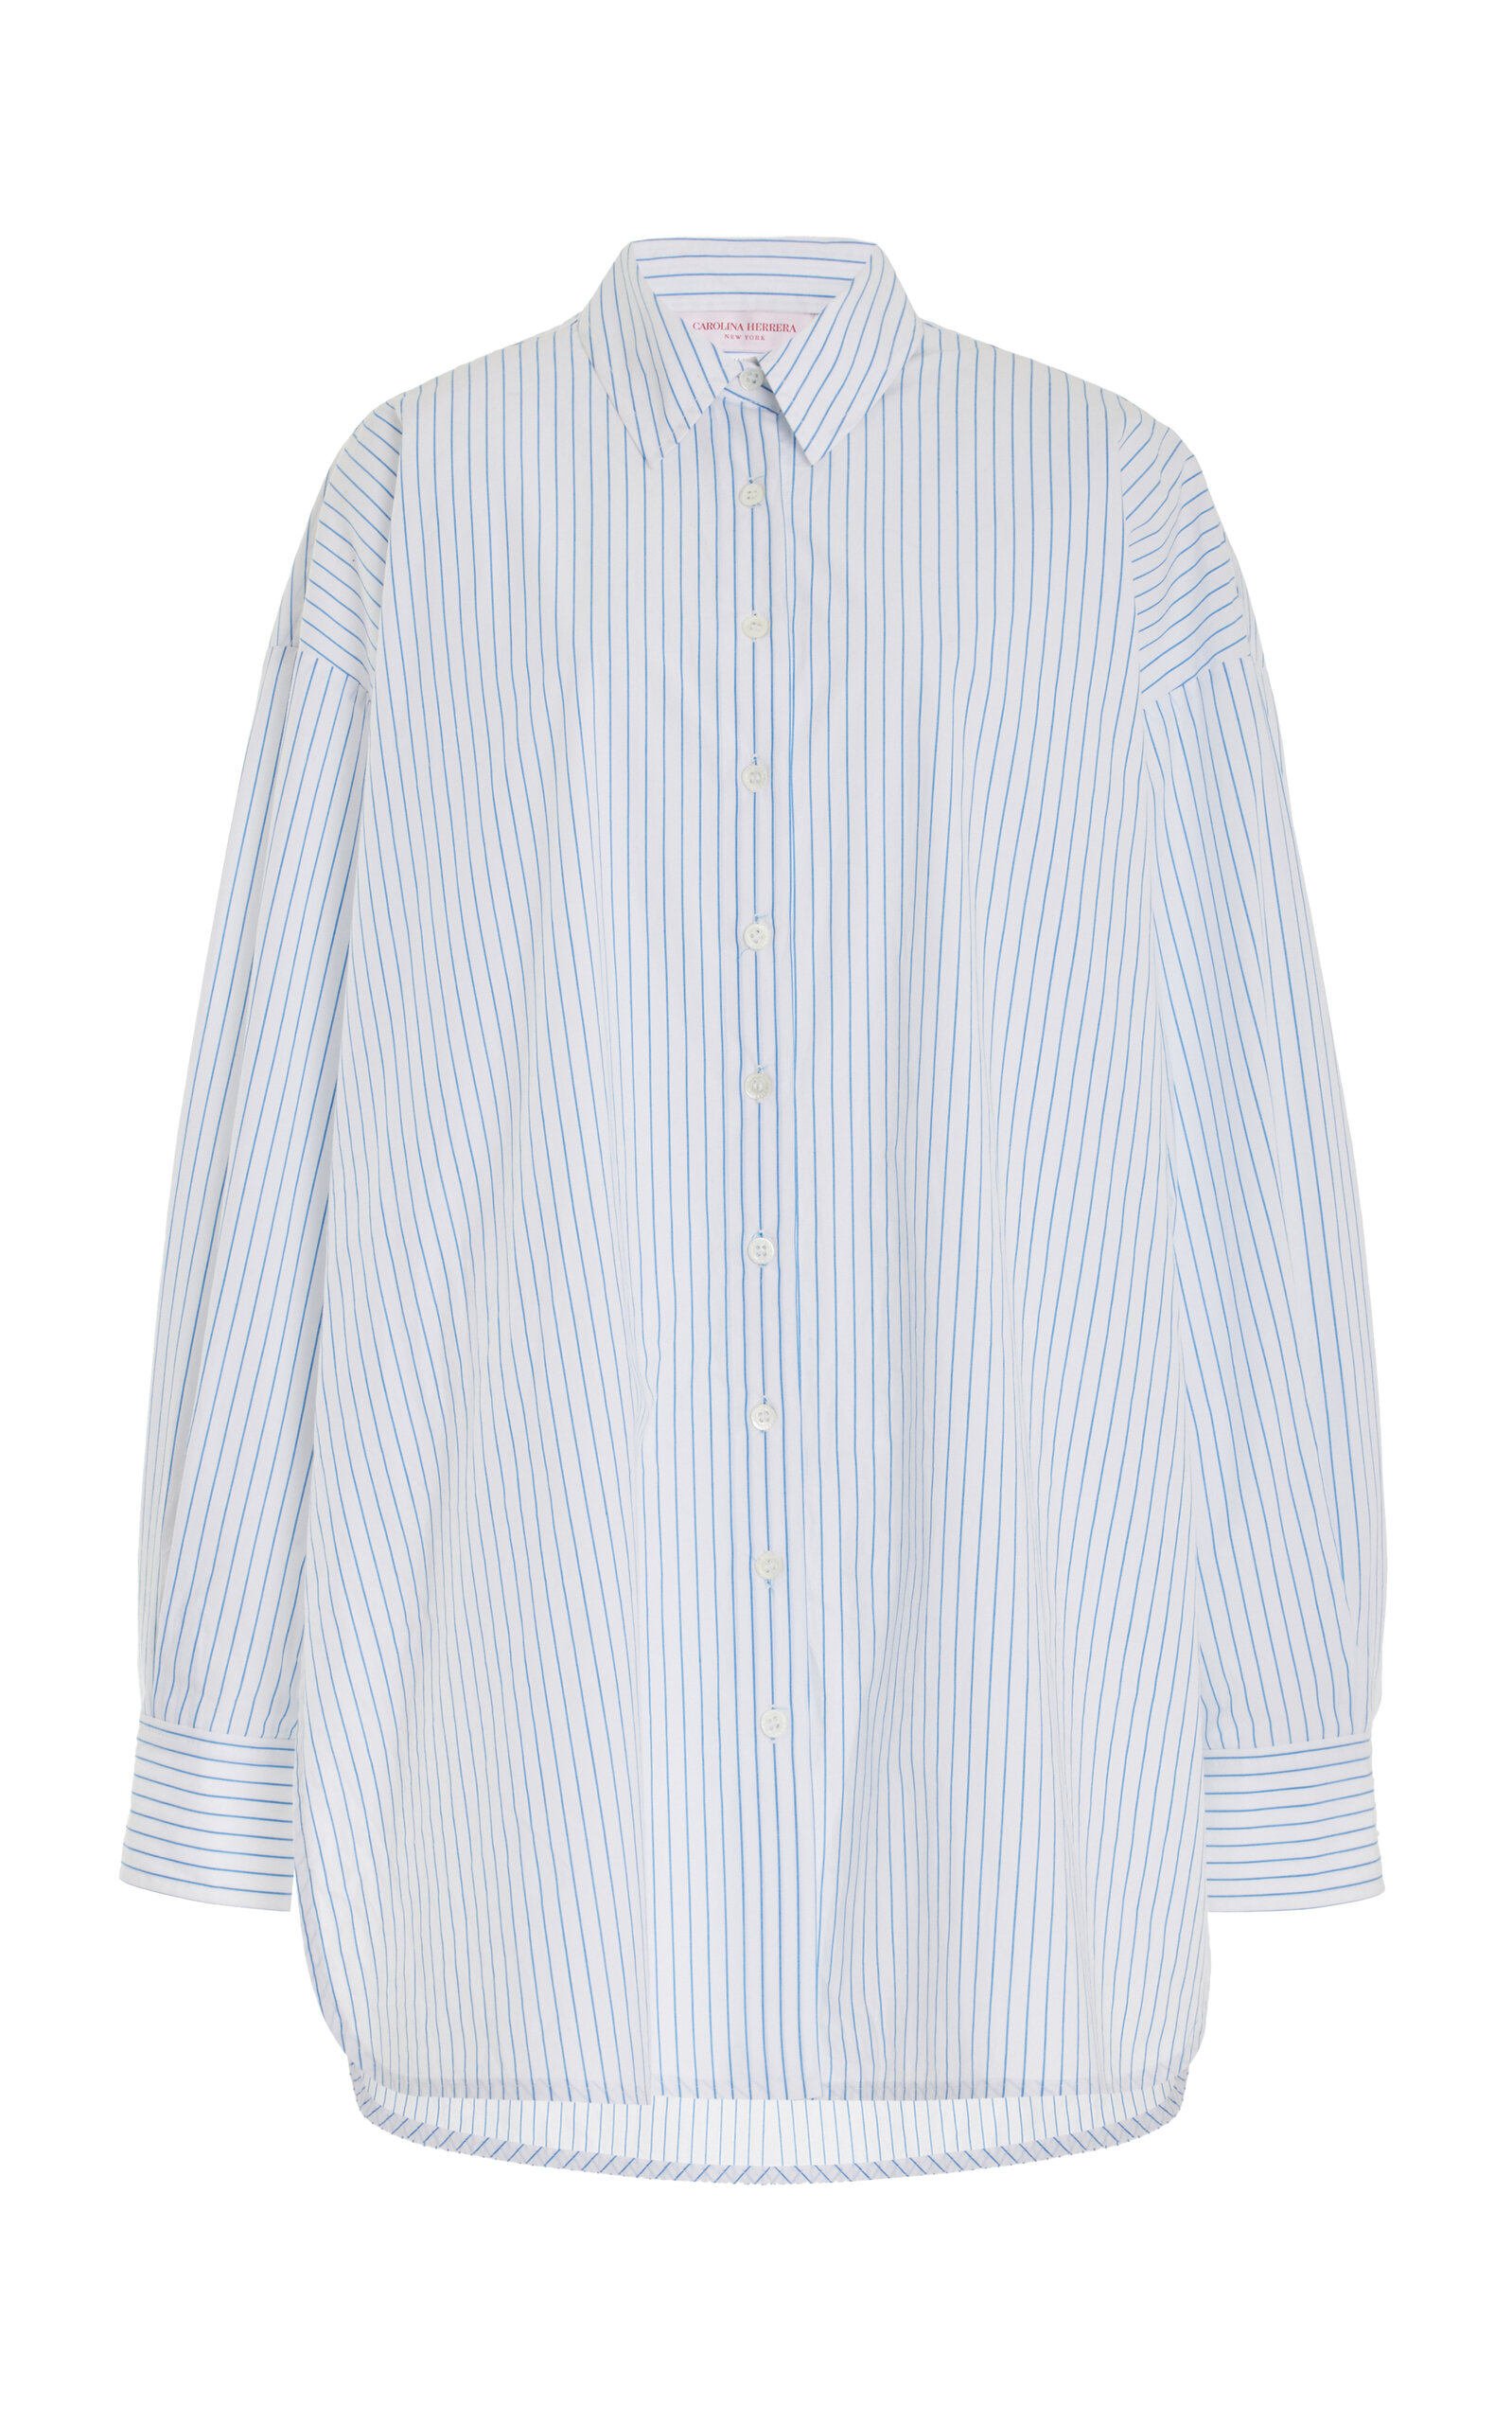 Carolina Herrera - Striped Cotton Shirt - White - US 2 - Moda Operandi